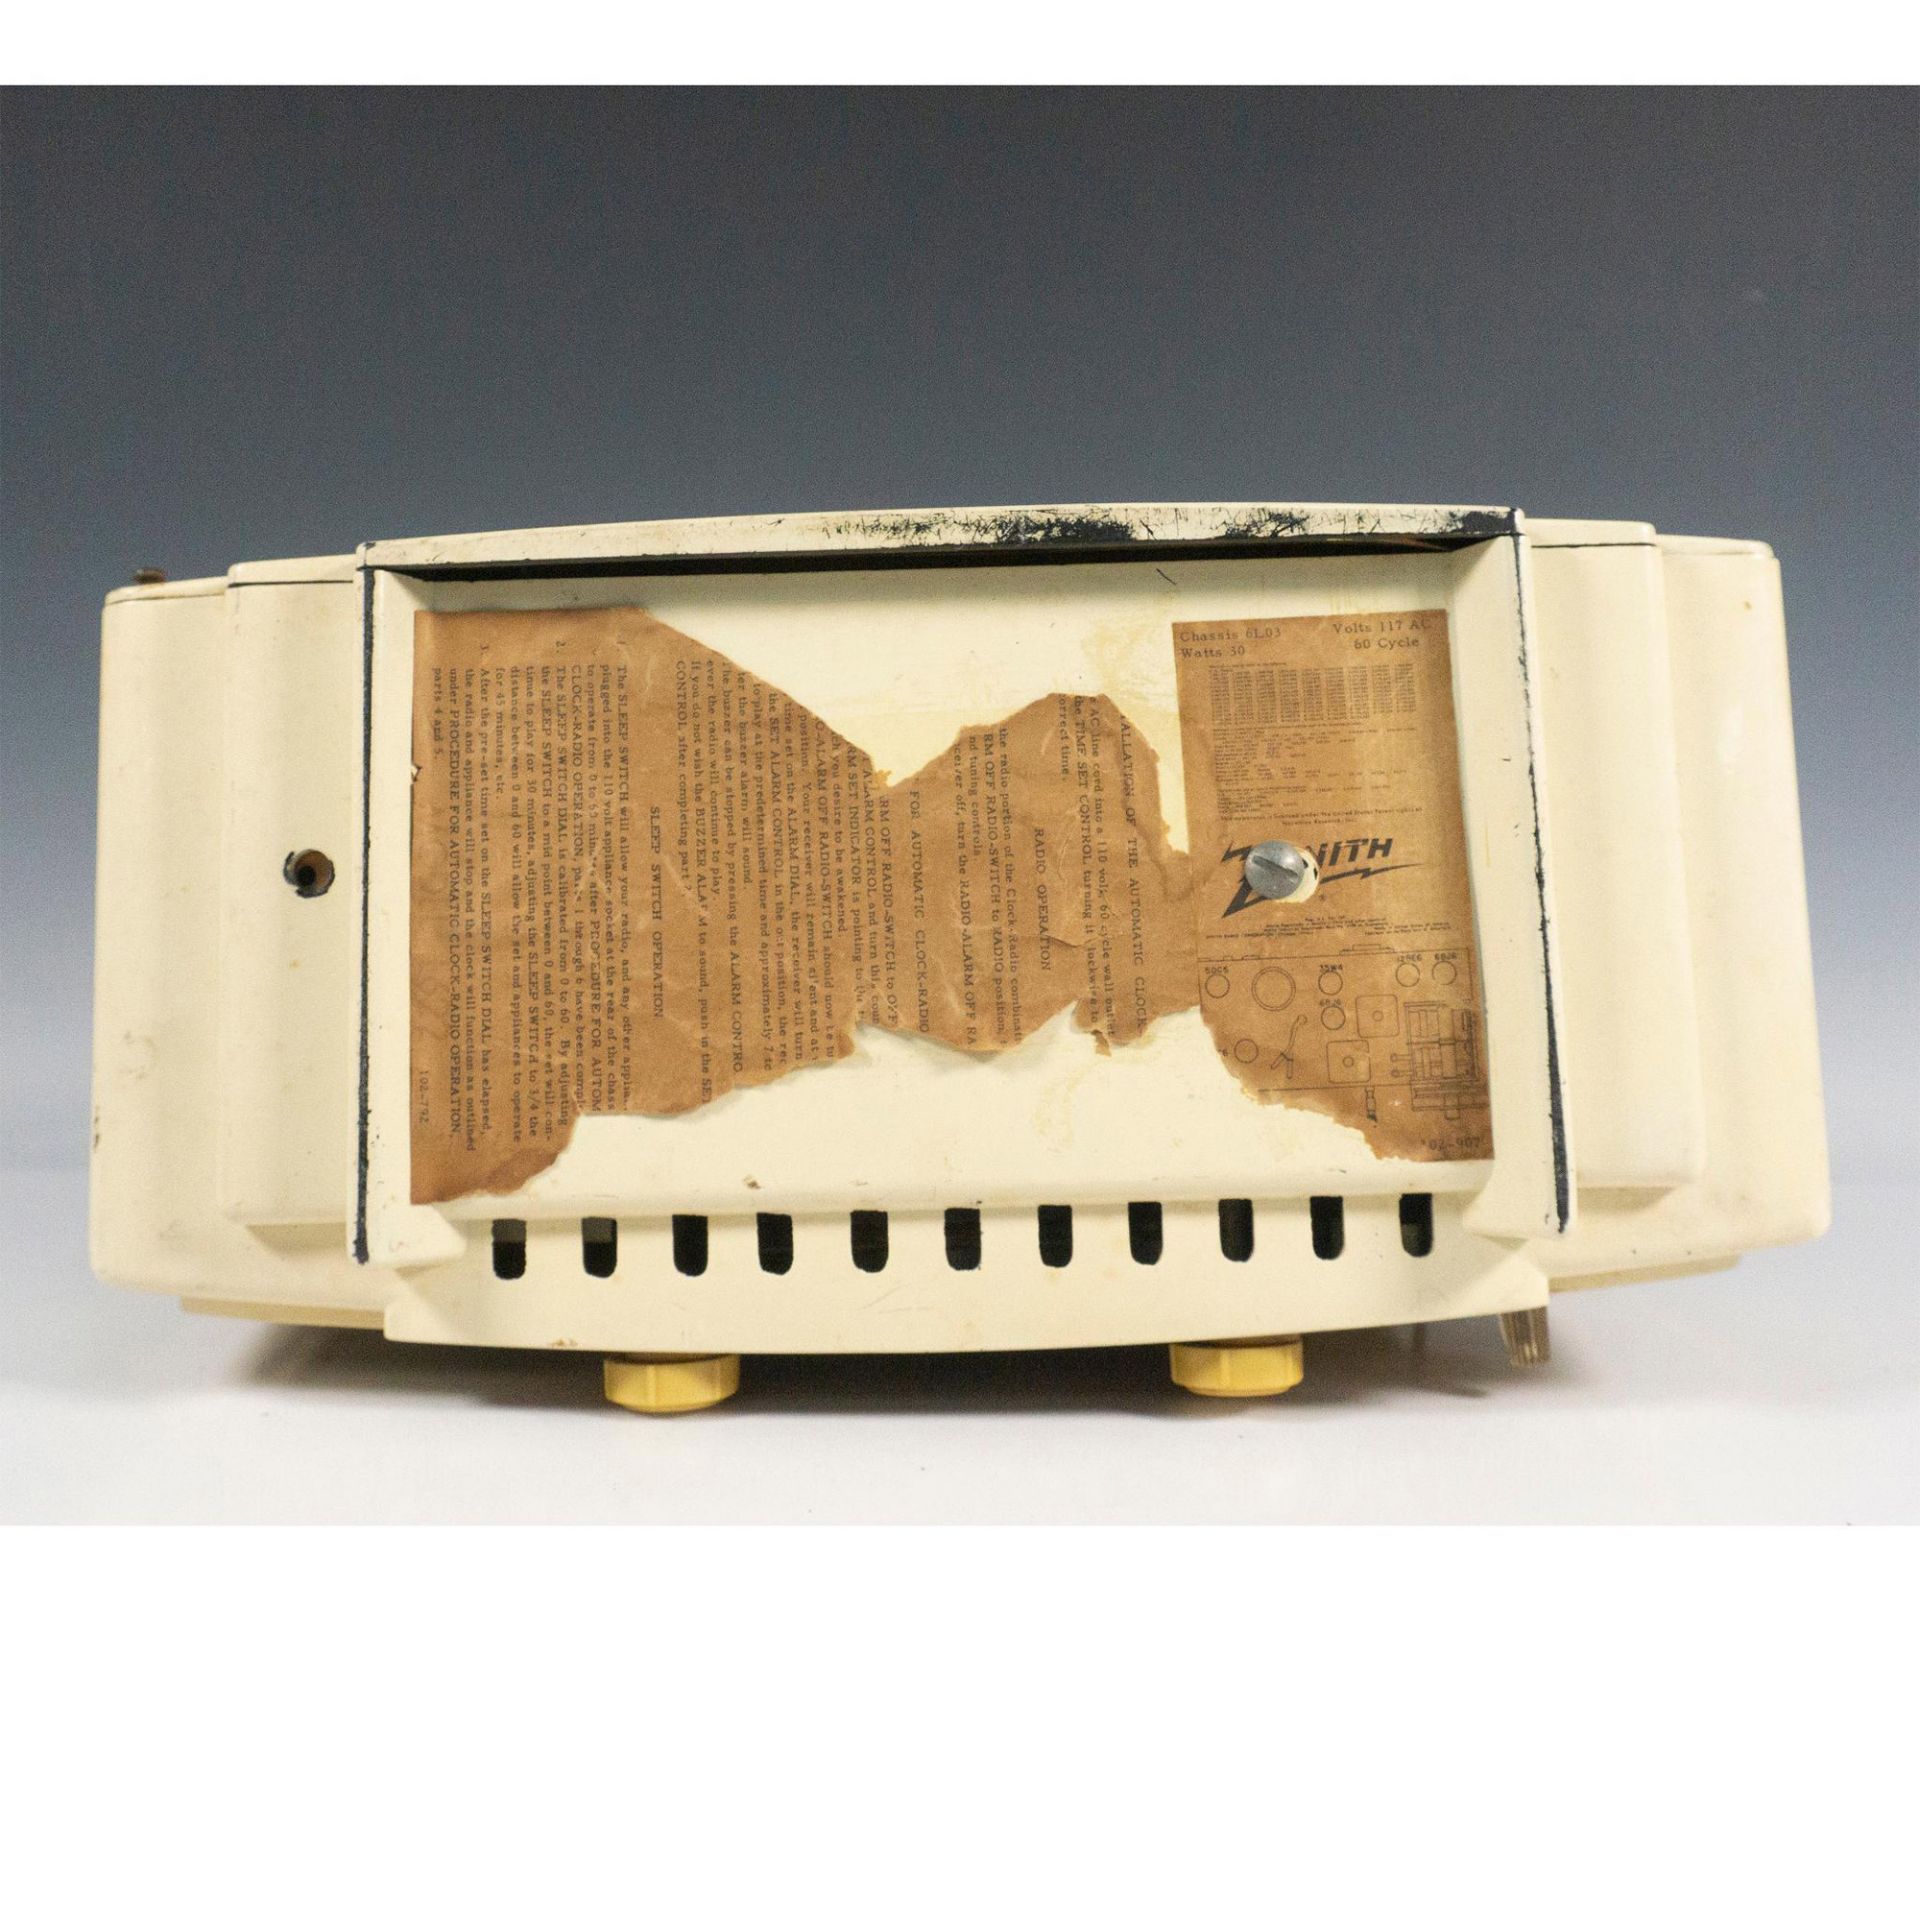 Vintage Zenith Model K622 Vacuum Tube Radio Alarm Clock - Image 4 of 4